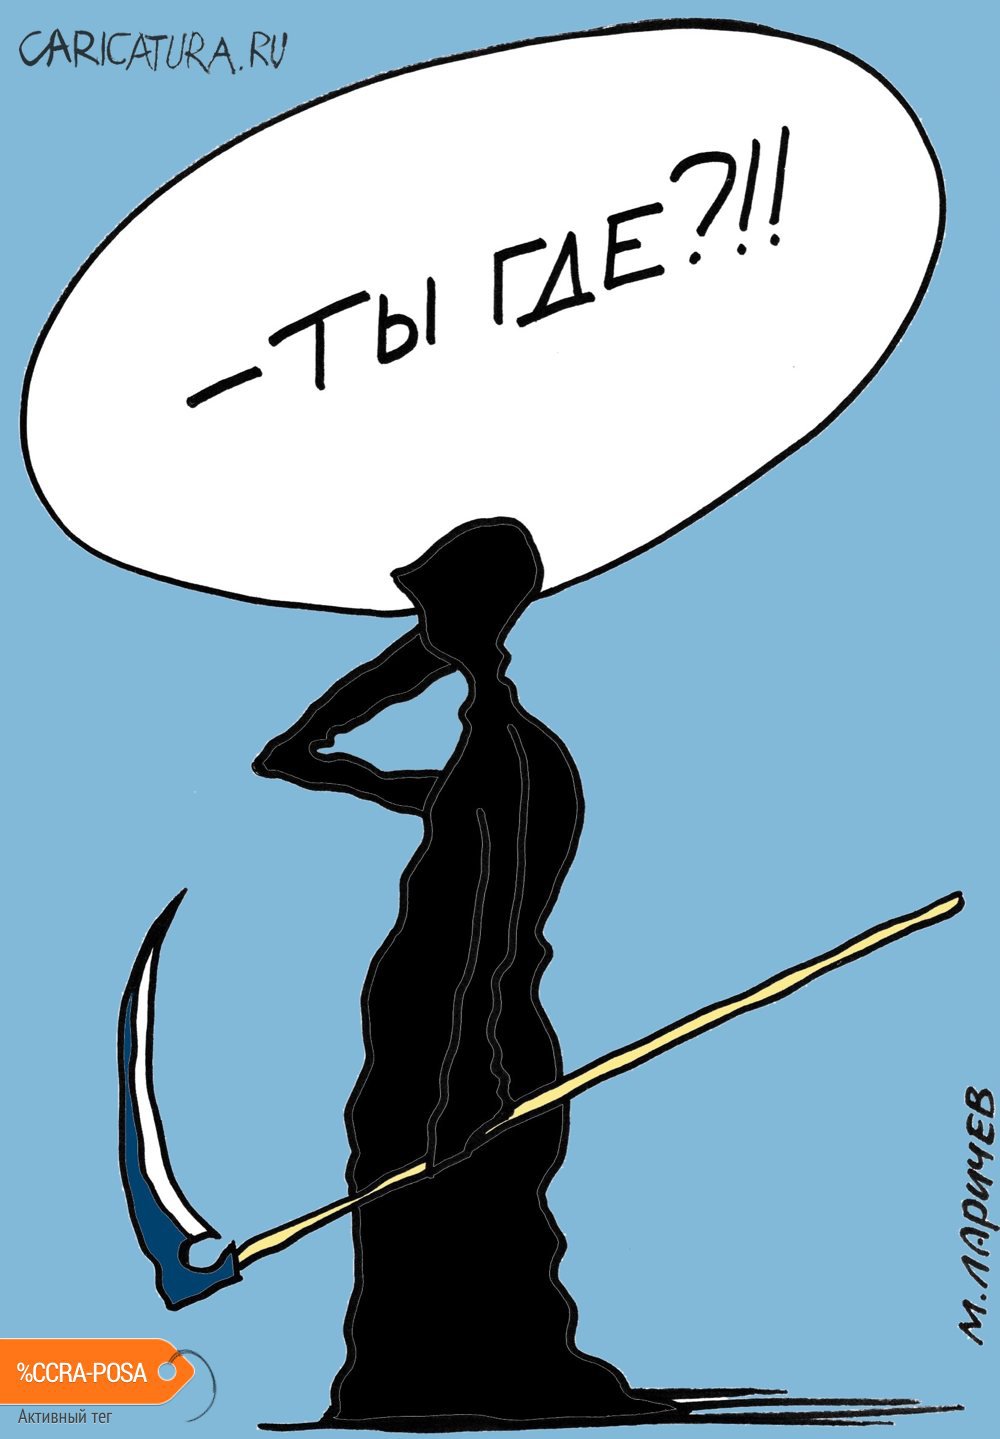 Карикатура "Прятки", Михаил Ларичев